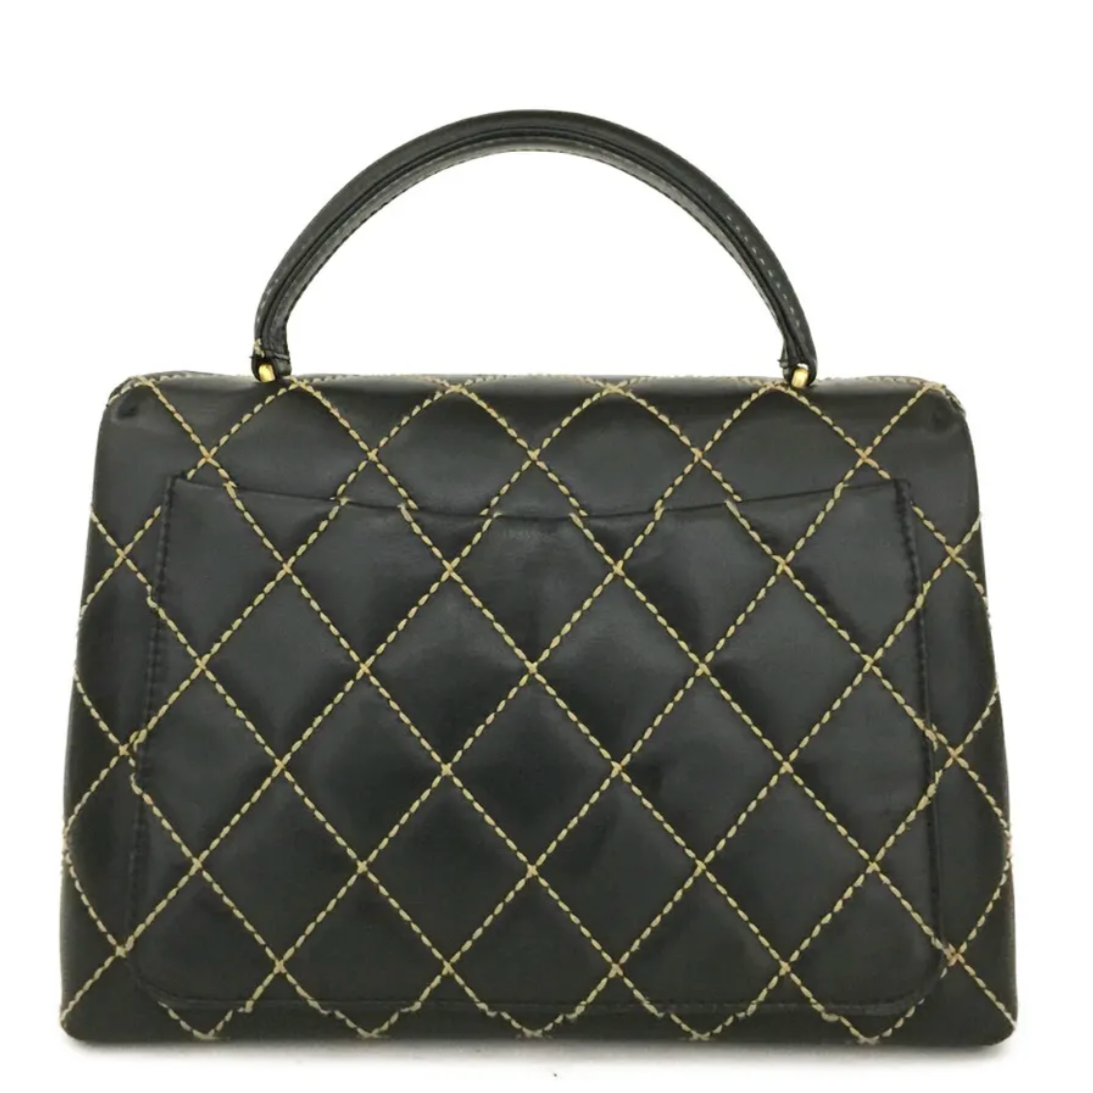 Chanel 2005 Wild Stitch Lambskin Large Top Handle Flap Bag